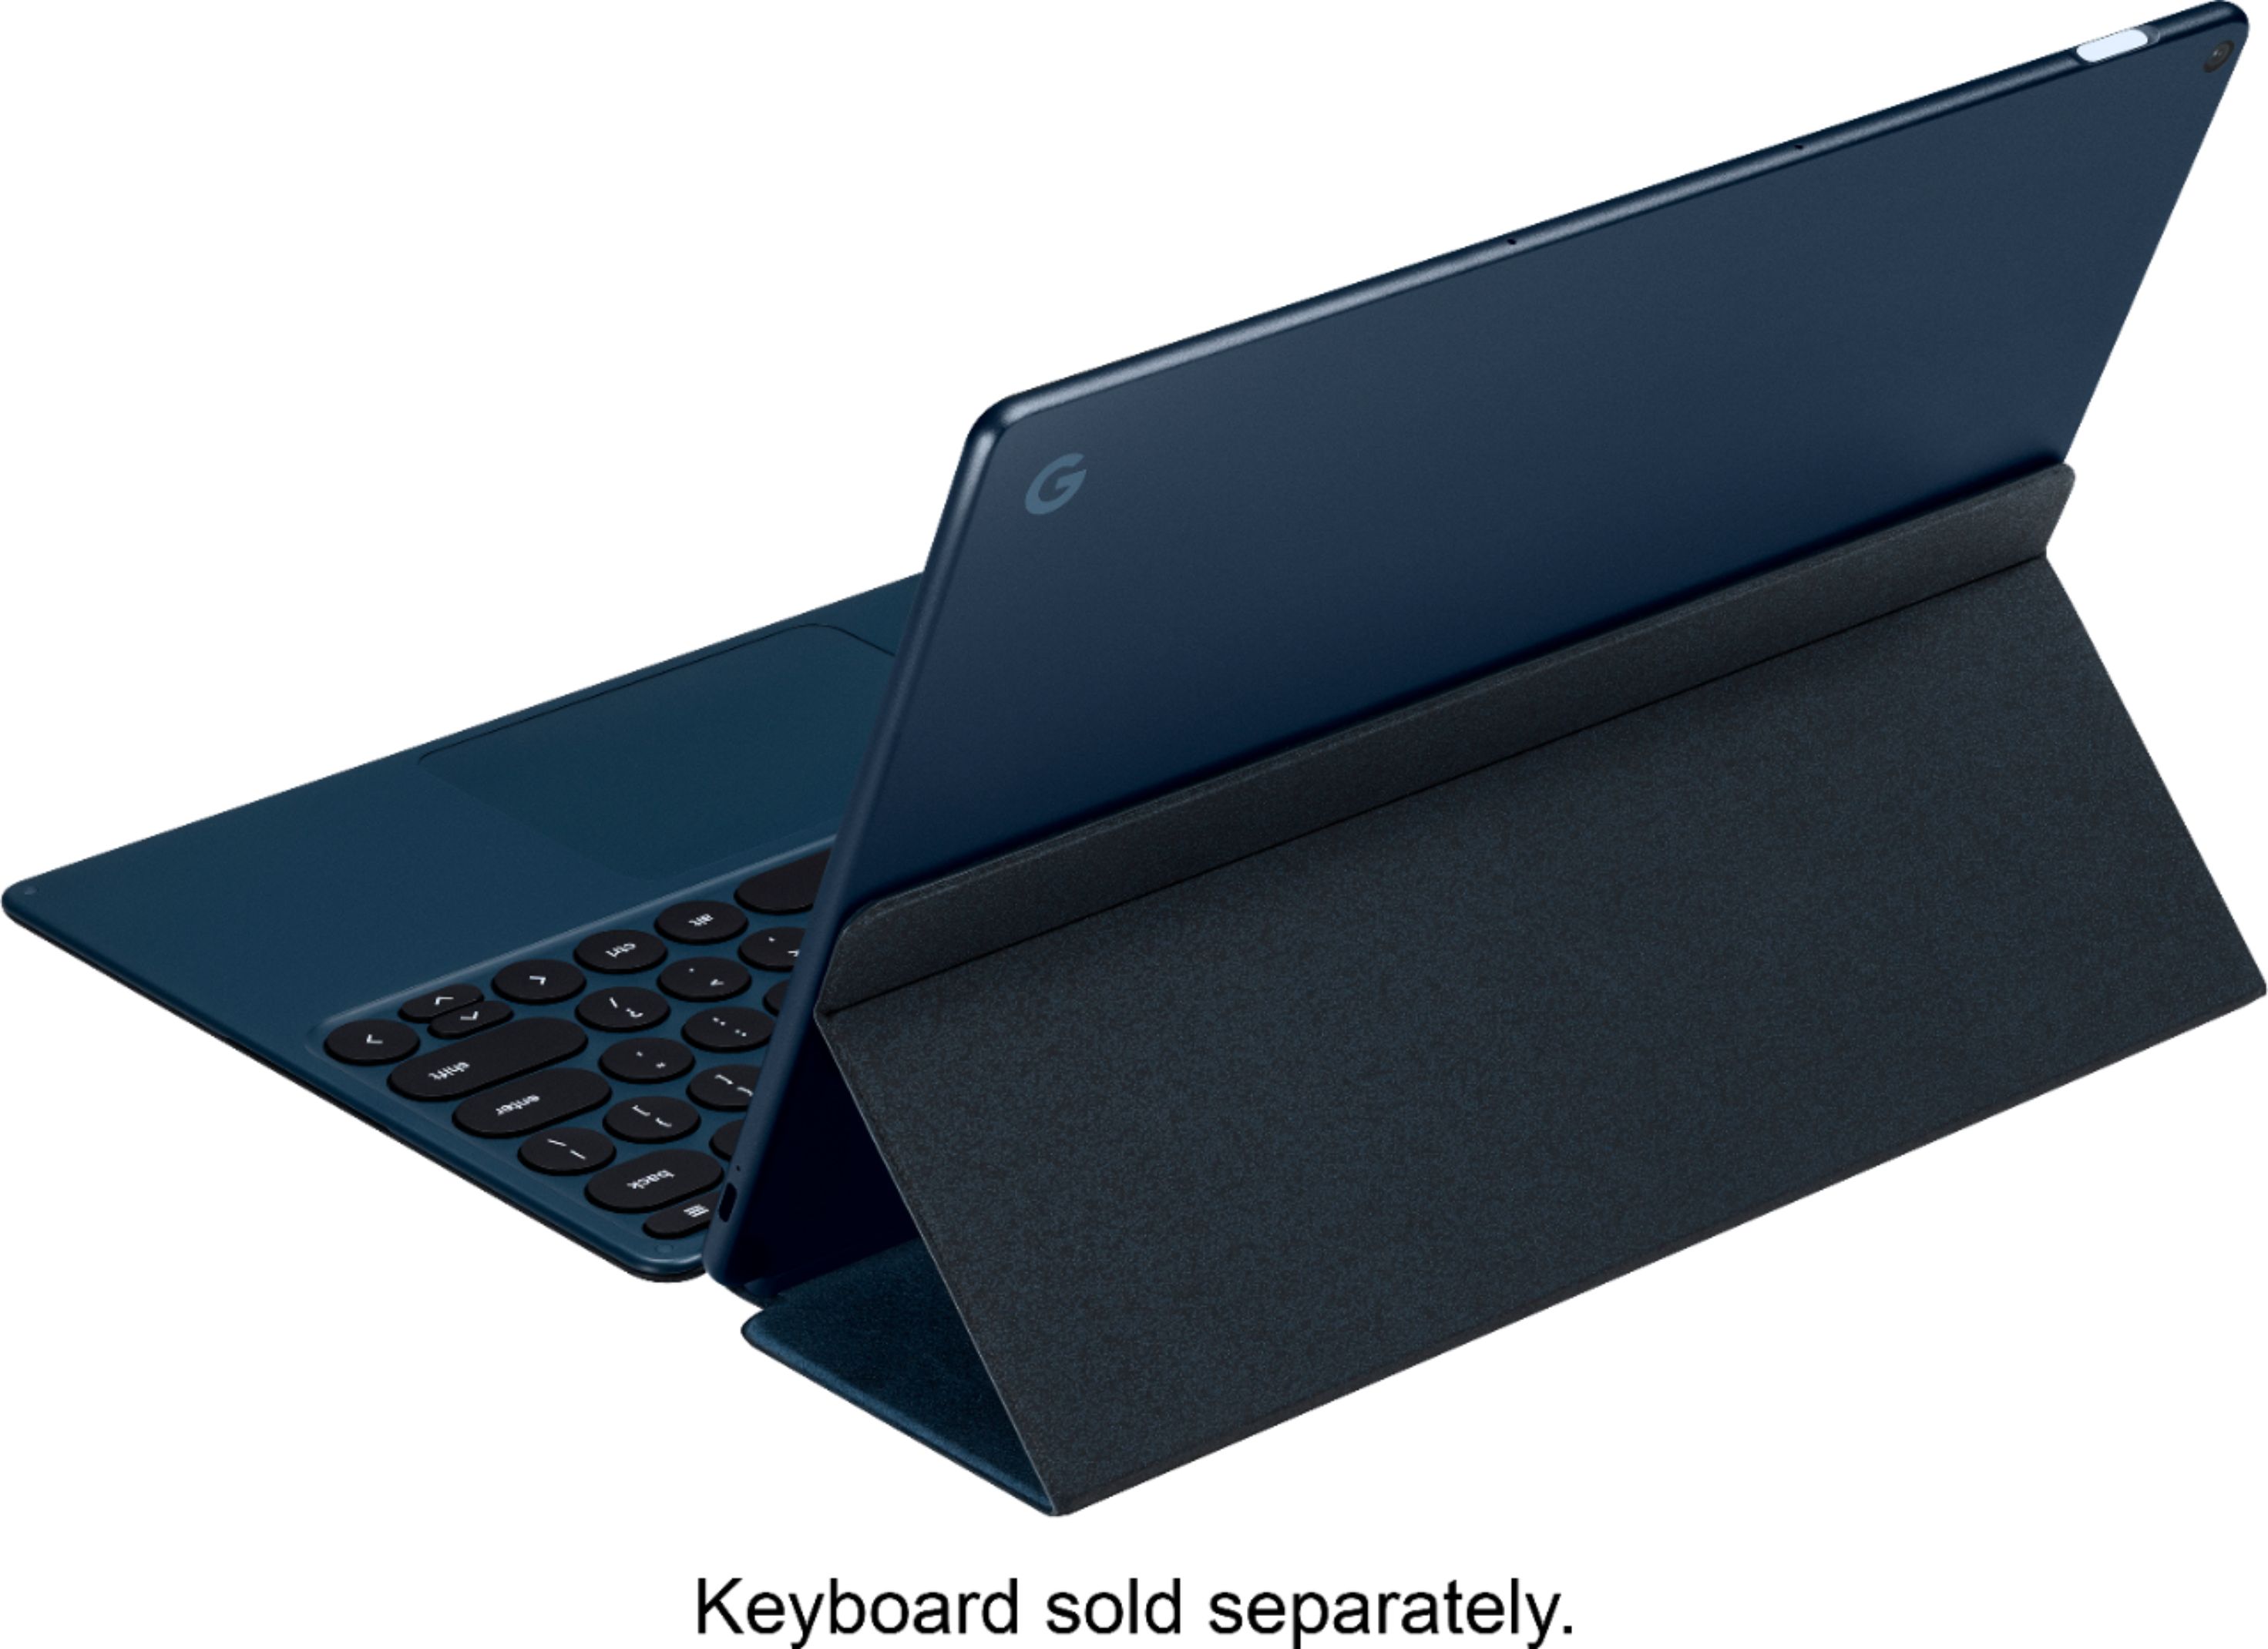 Best Buy: Google Pixel Slate 12.3 Tablet 128GB Midnight Blue